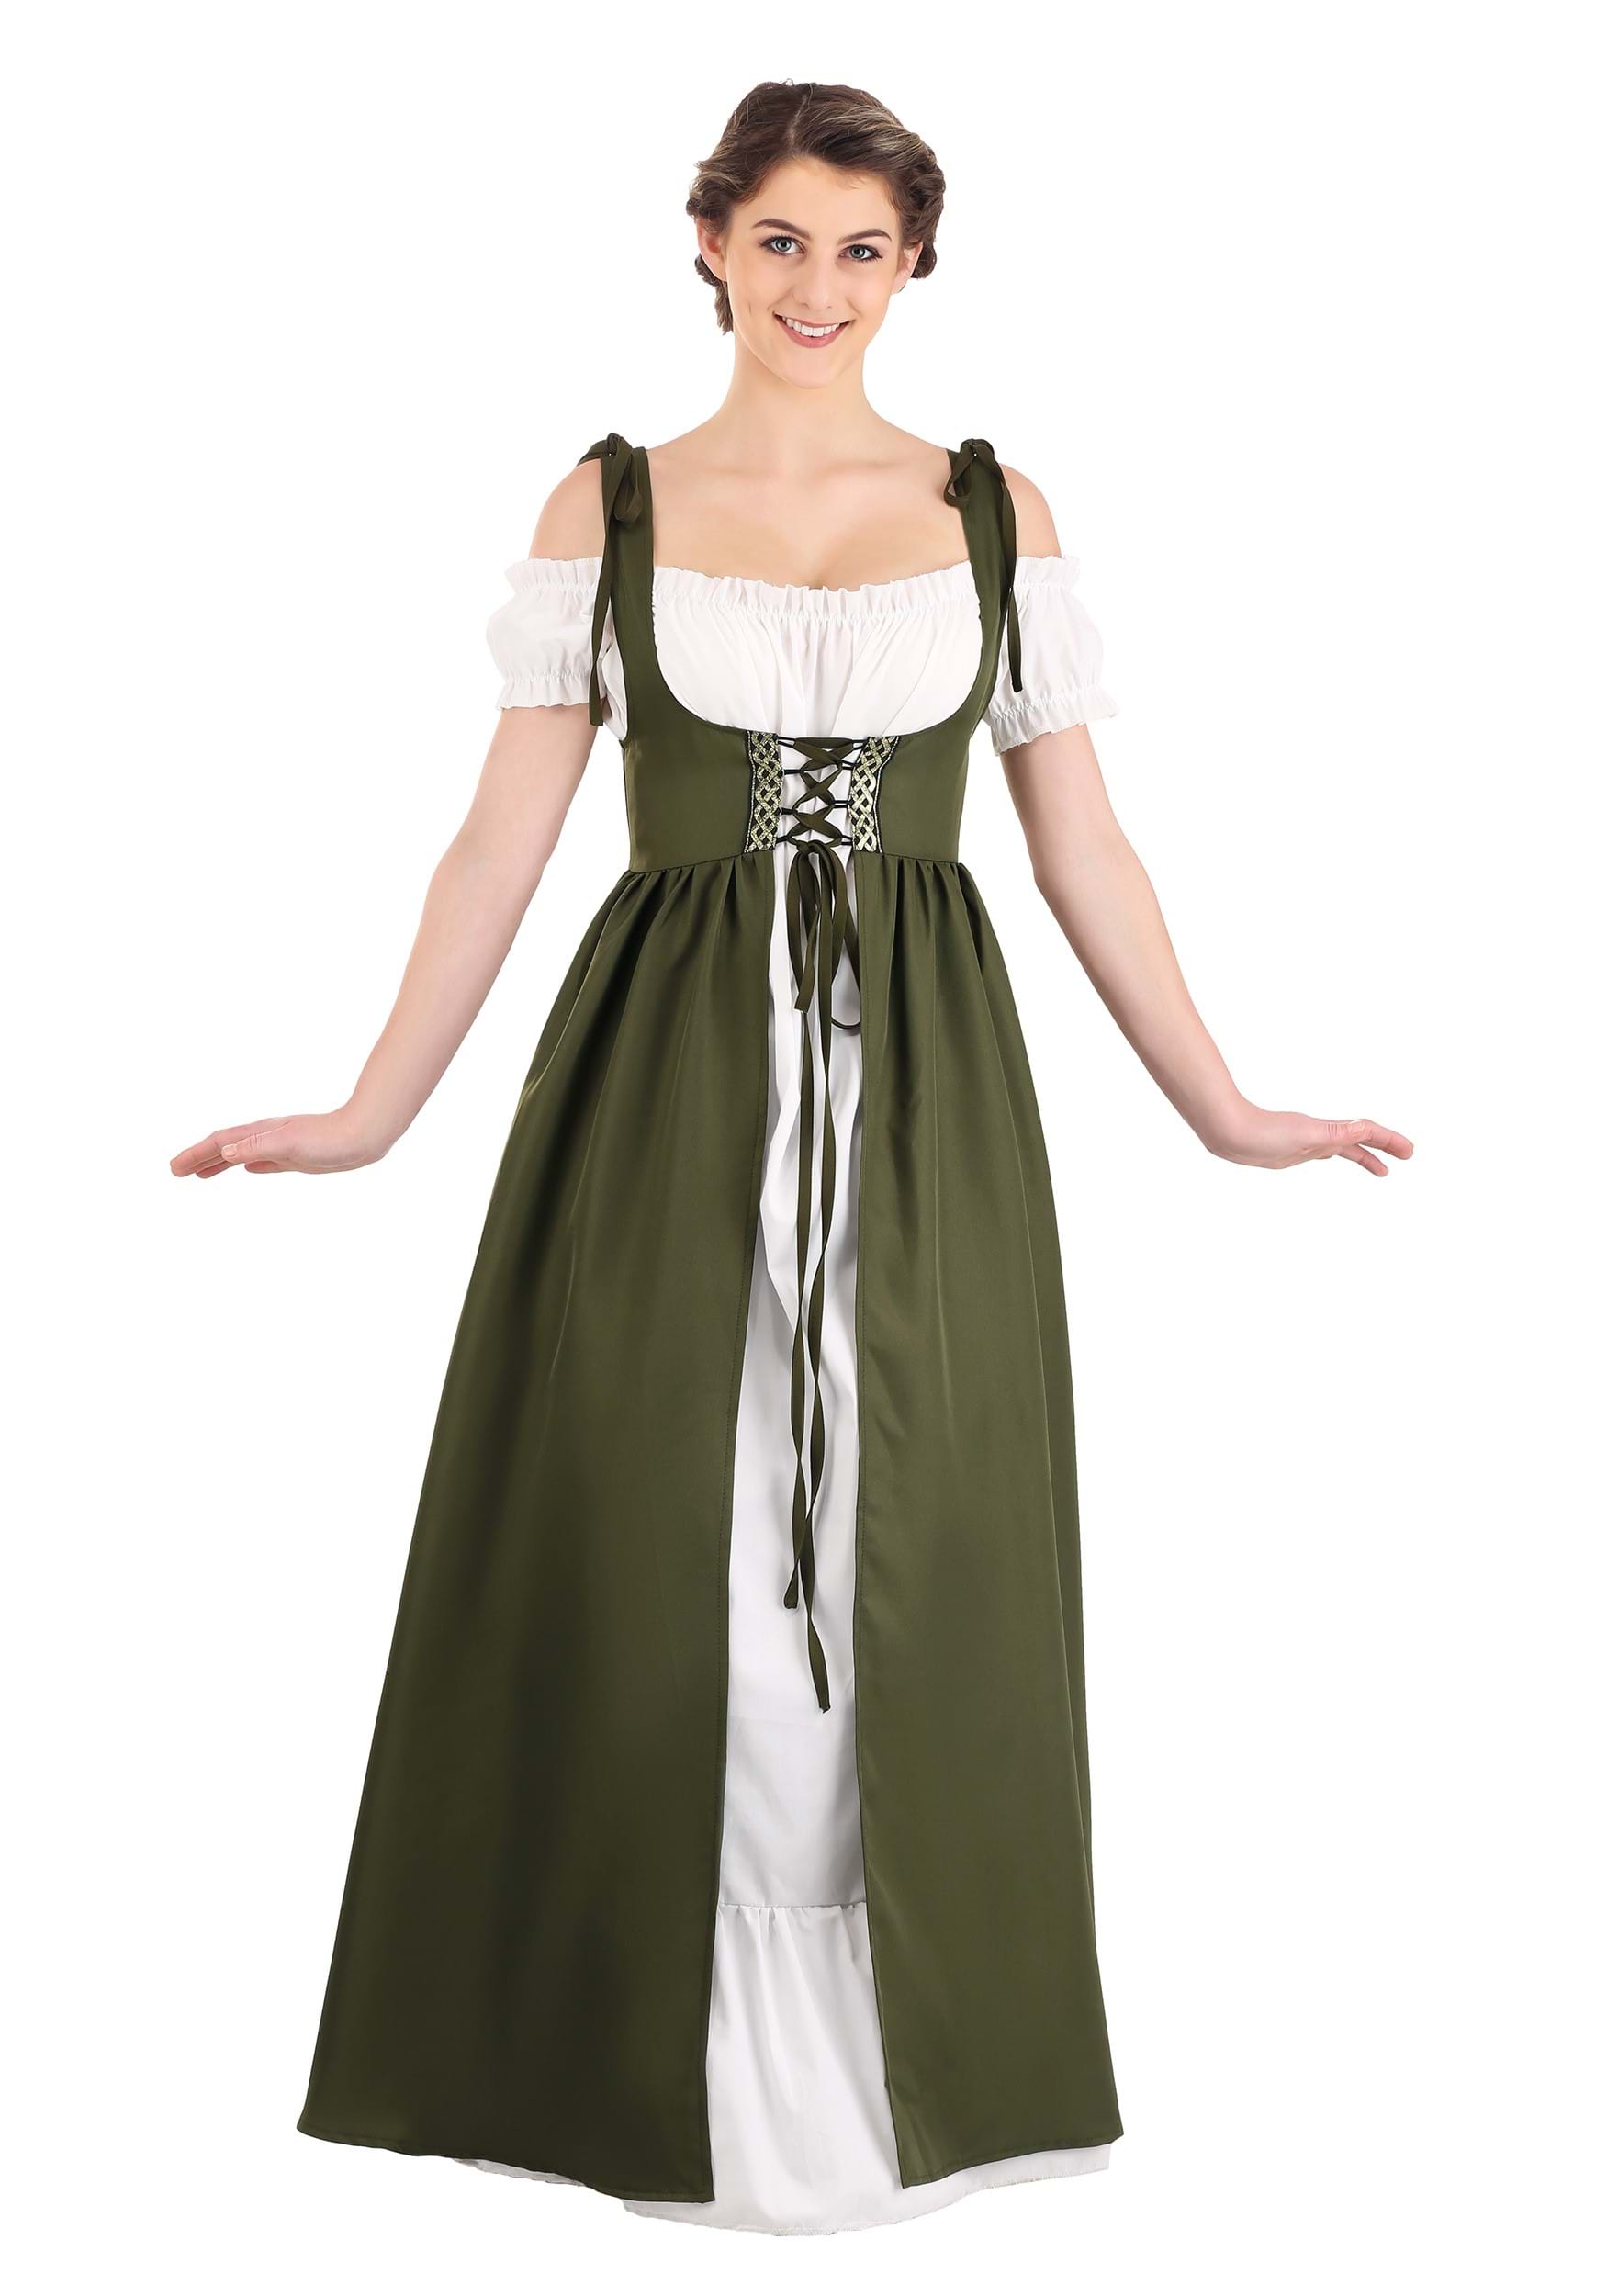 Photos - Fancy Dress Fancy FUN Costumes Celtic Renaissance Women's  Dress Costume Brown/Gree 